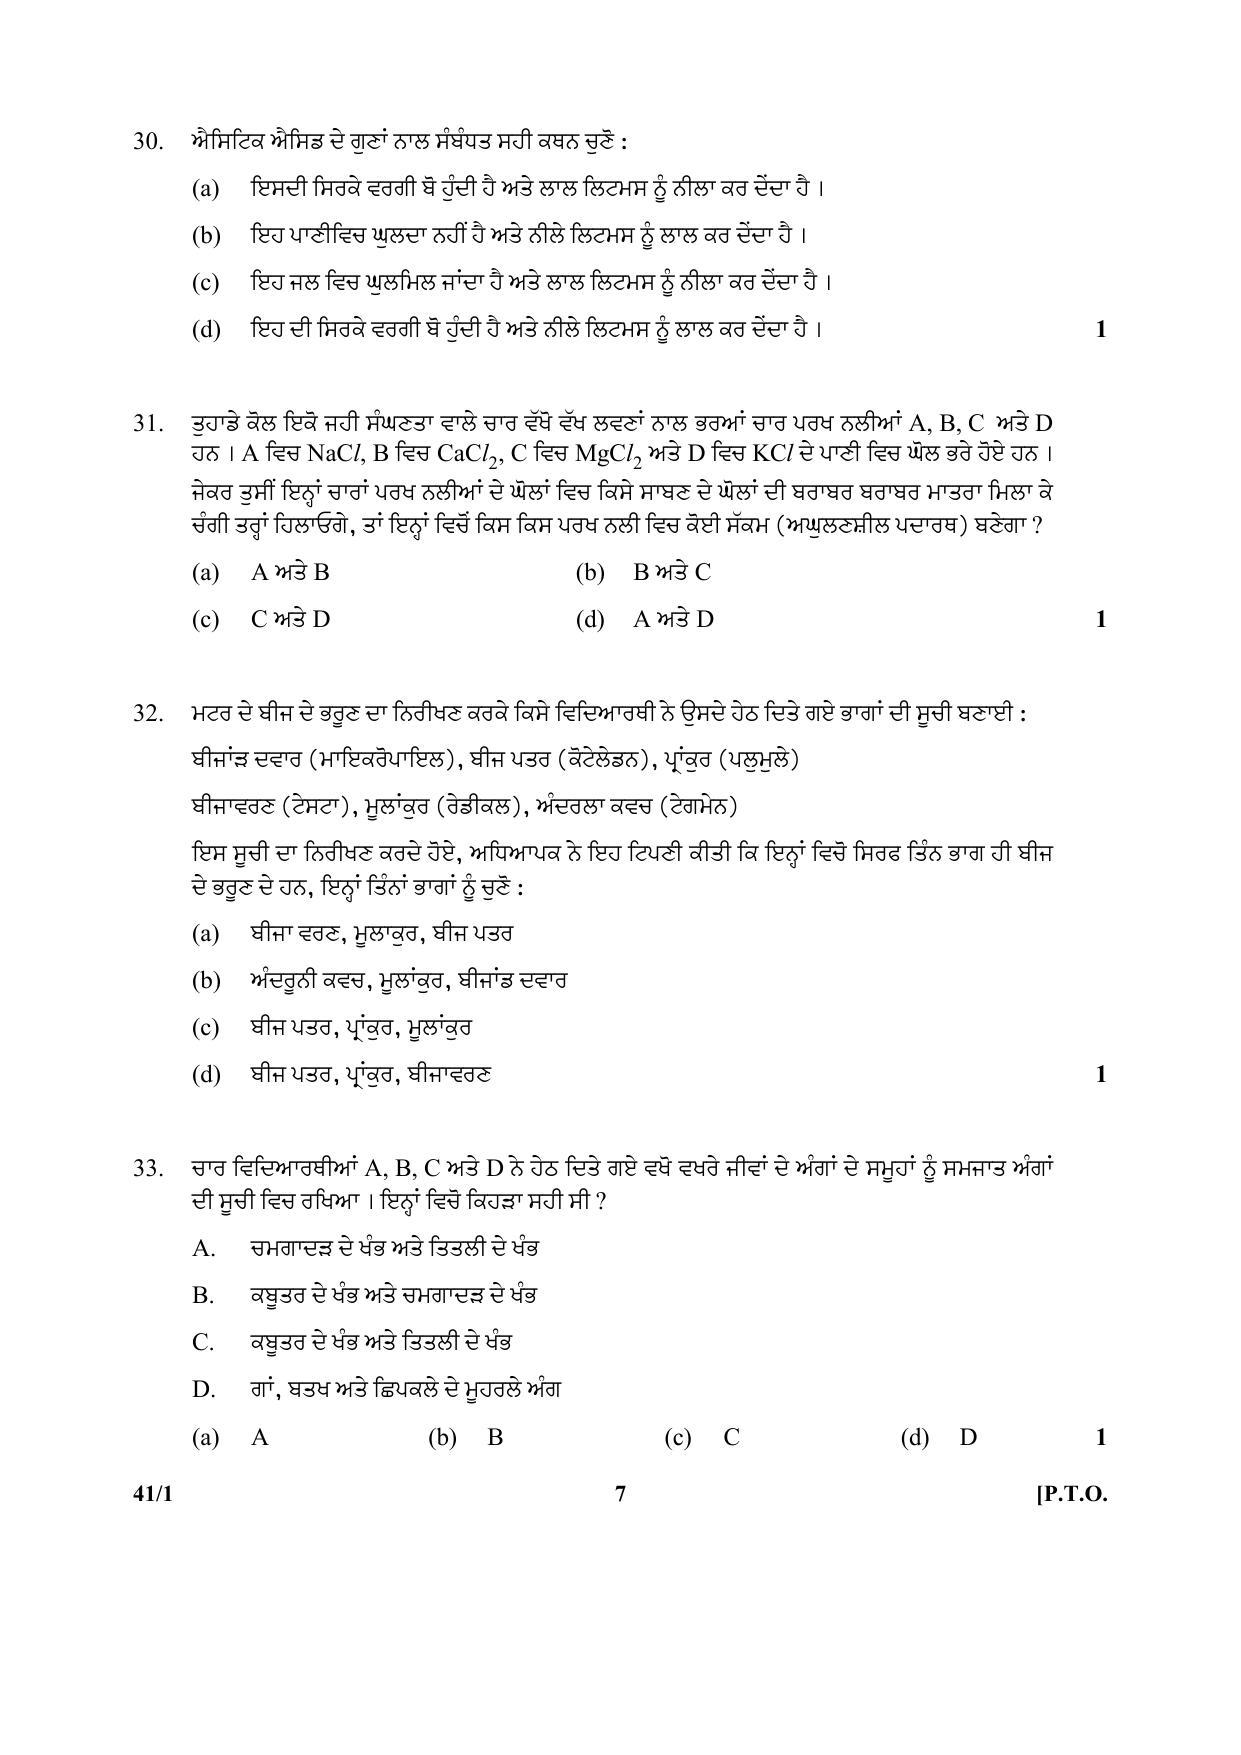 CBSE Class 10 41-1 (Science) Punjabi 2017-comptt Question Paper - Page 7